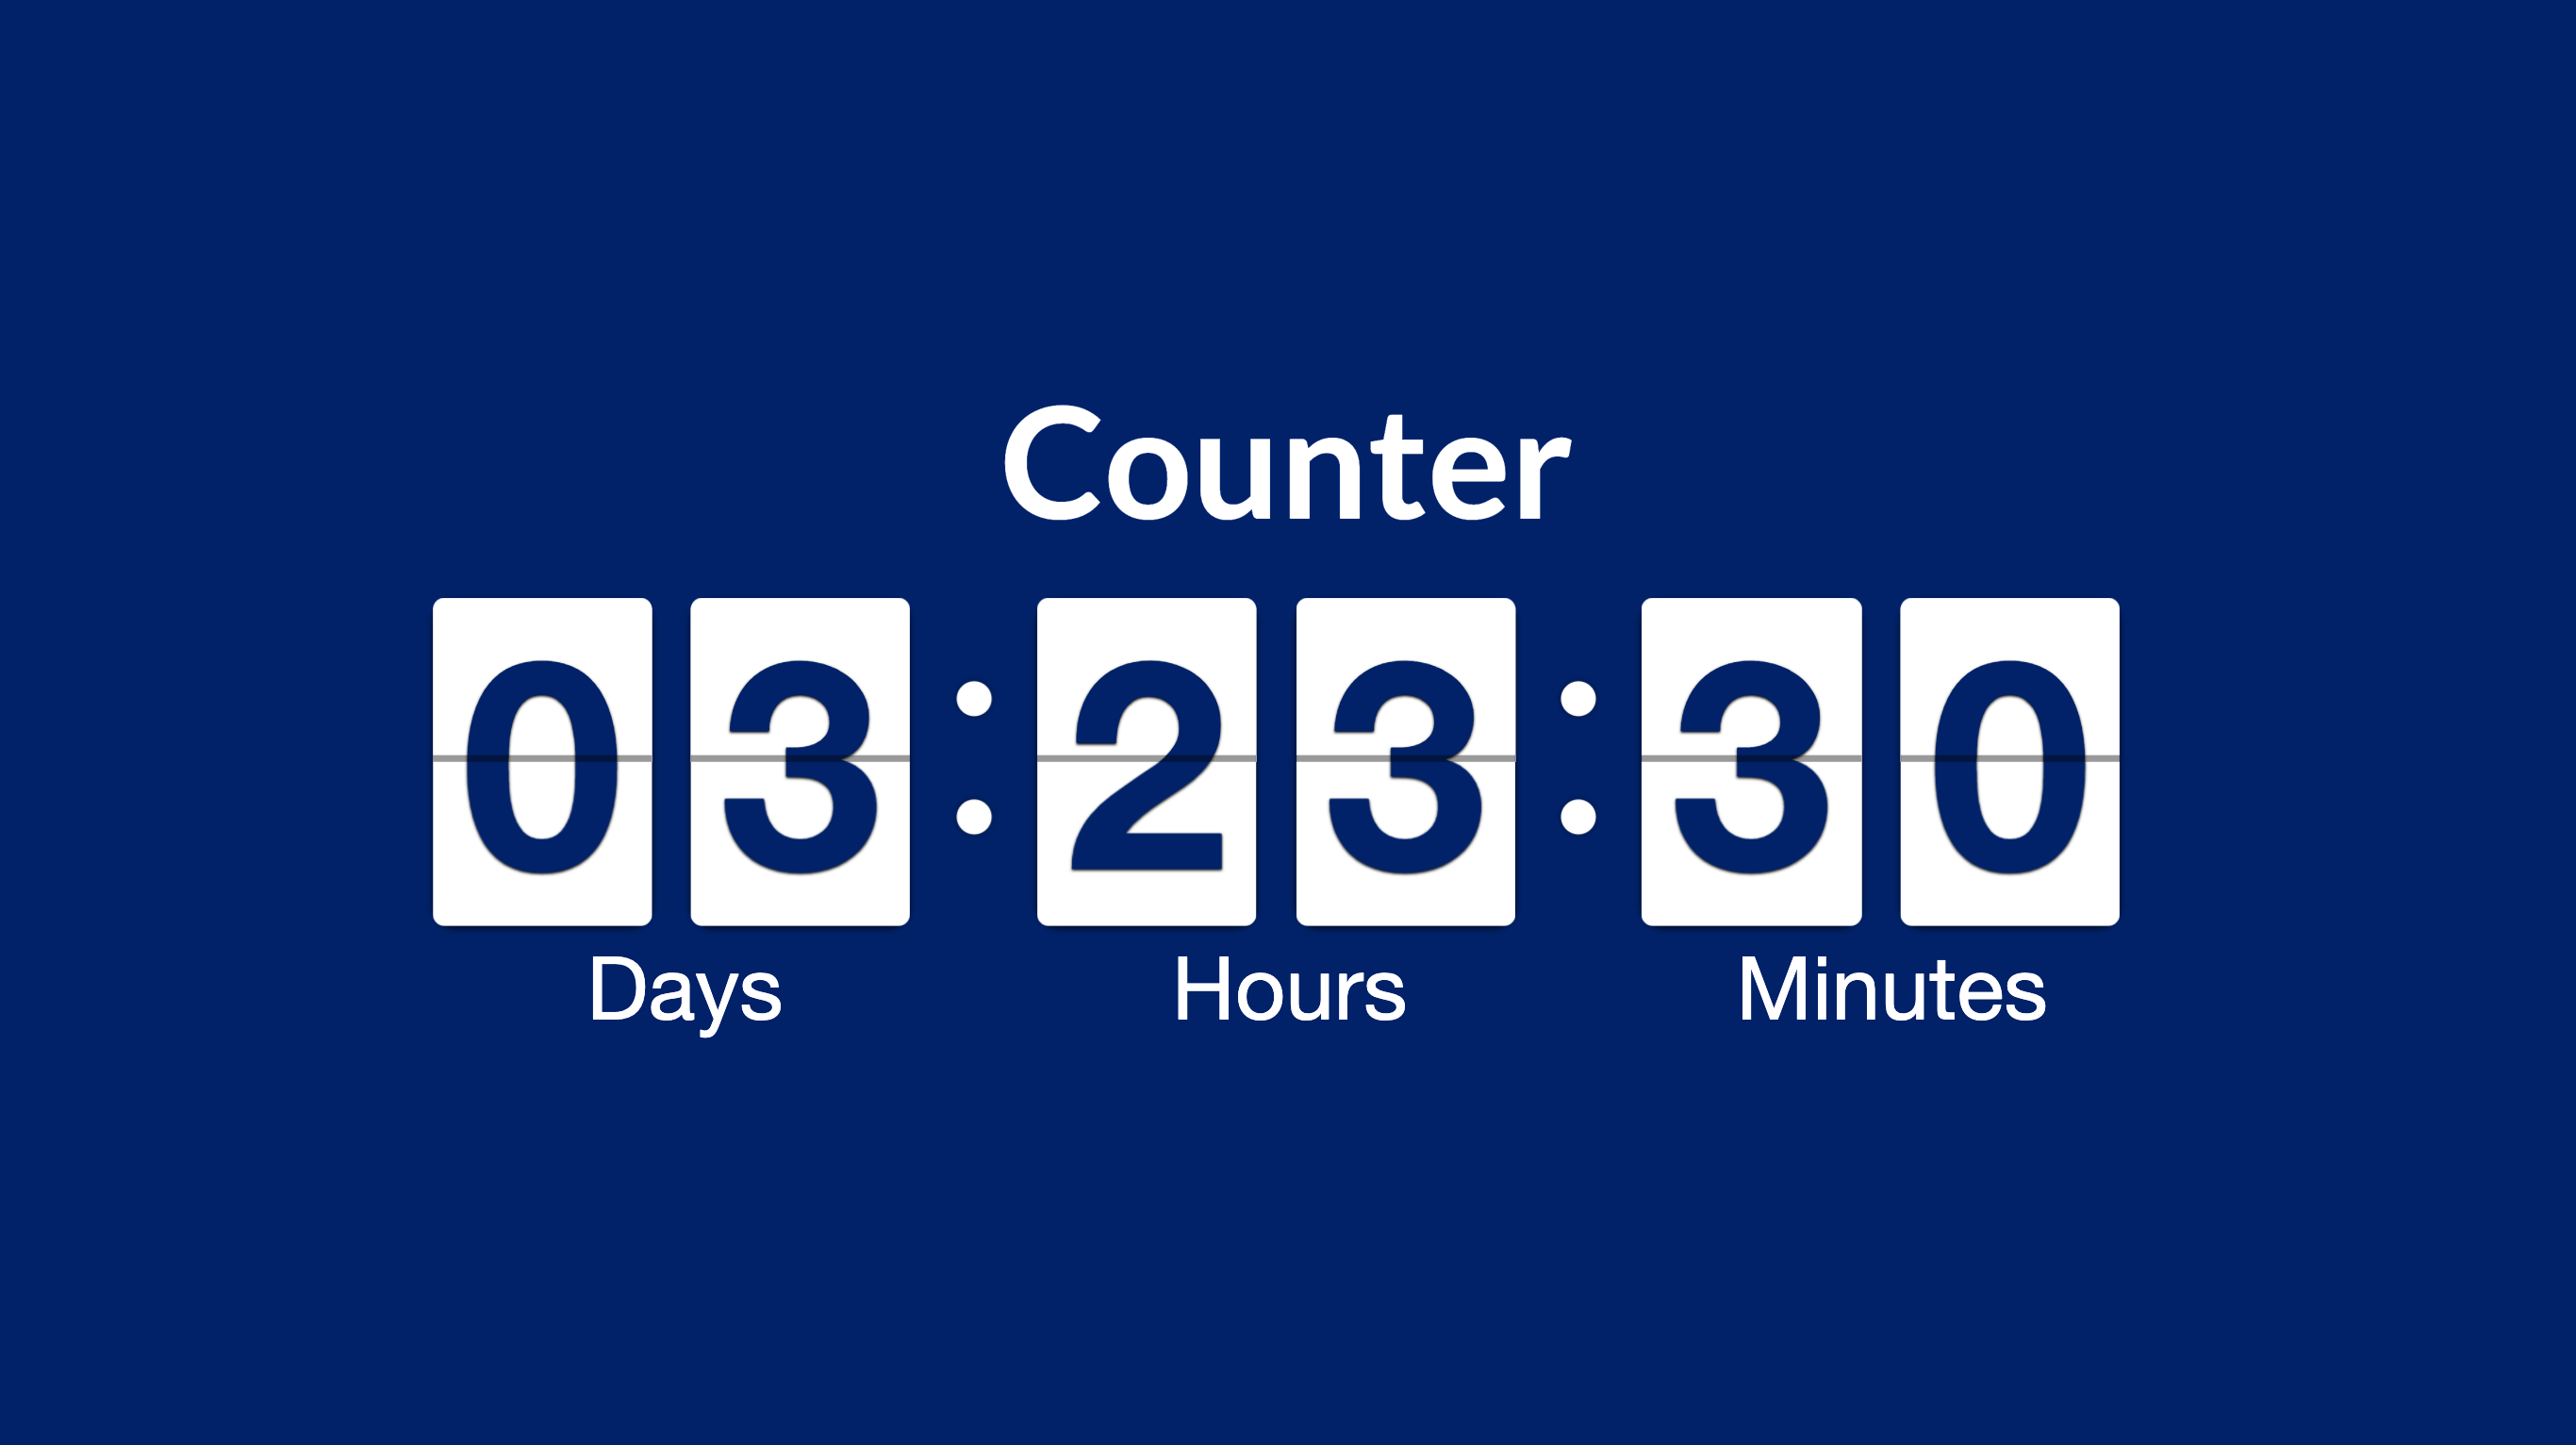 Countdown Timer App for Digital Signage